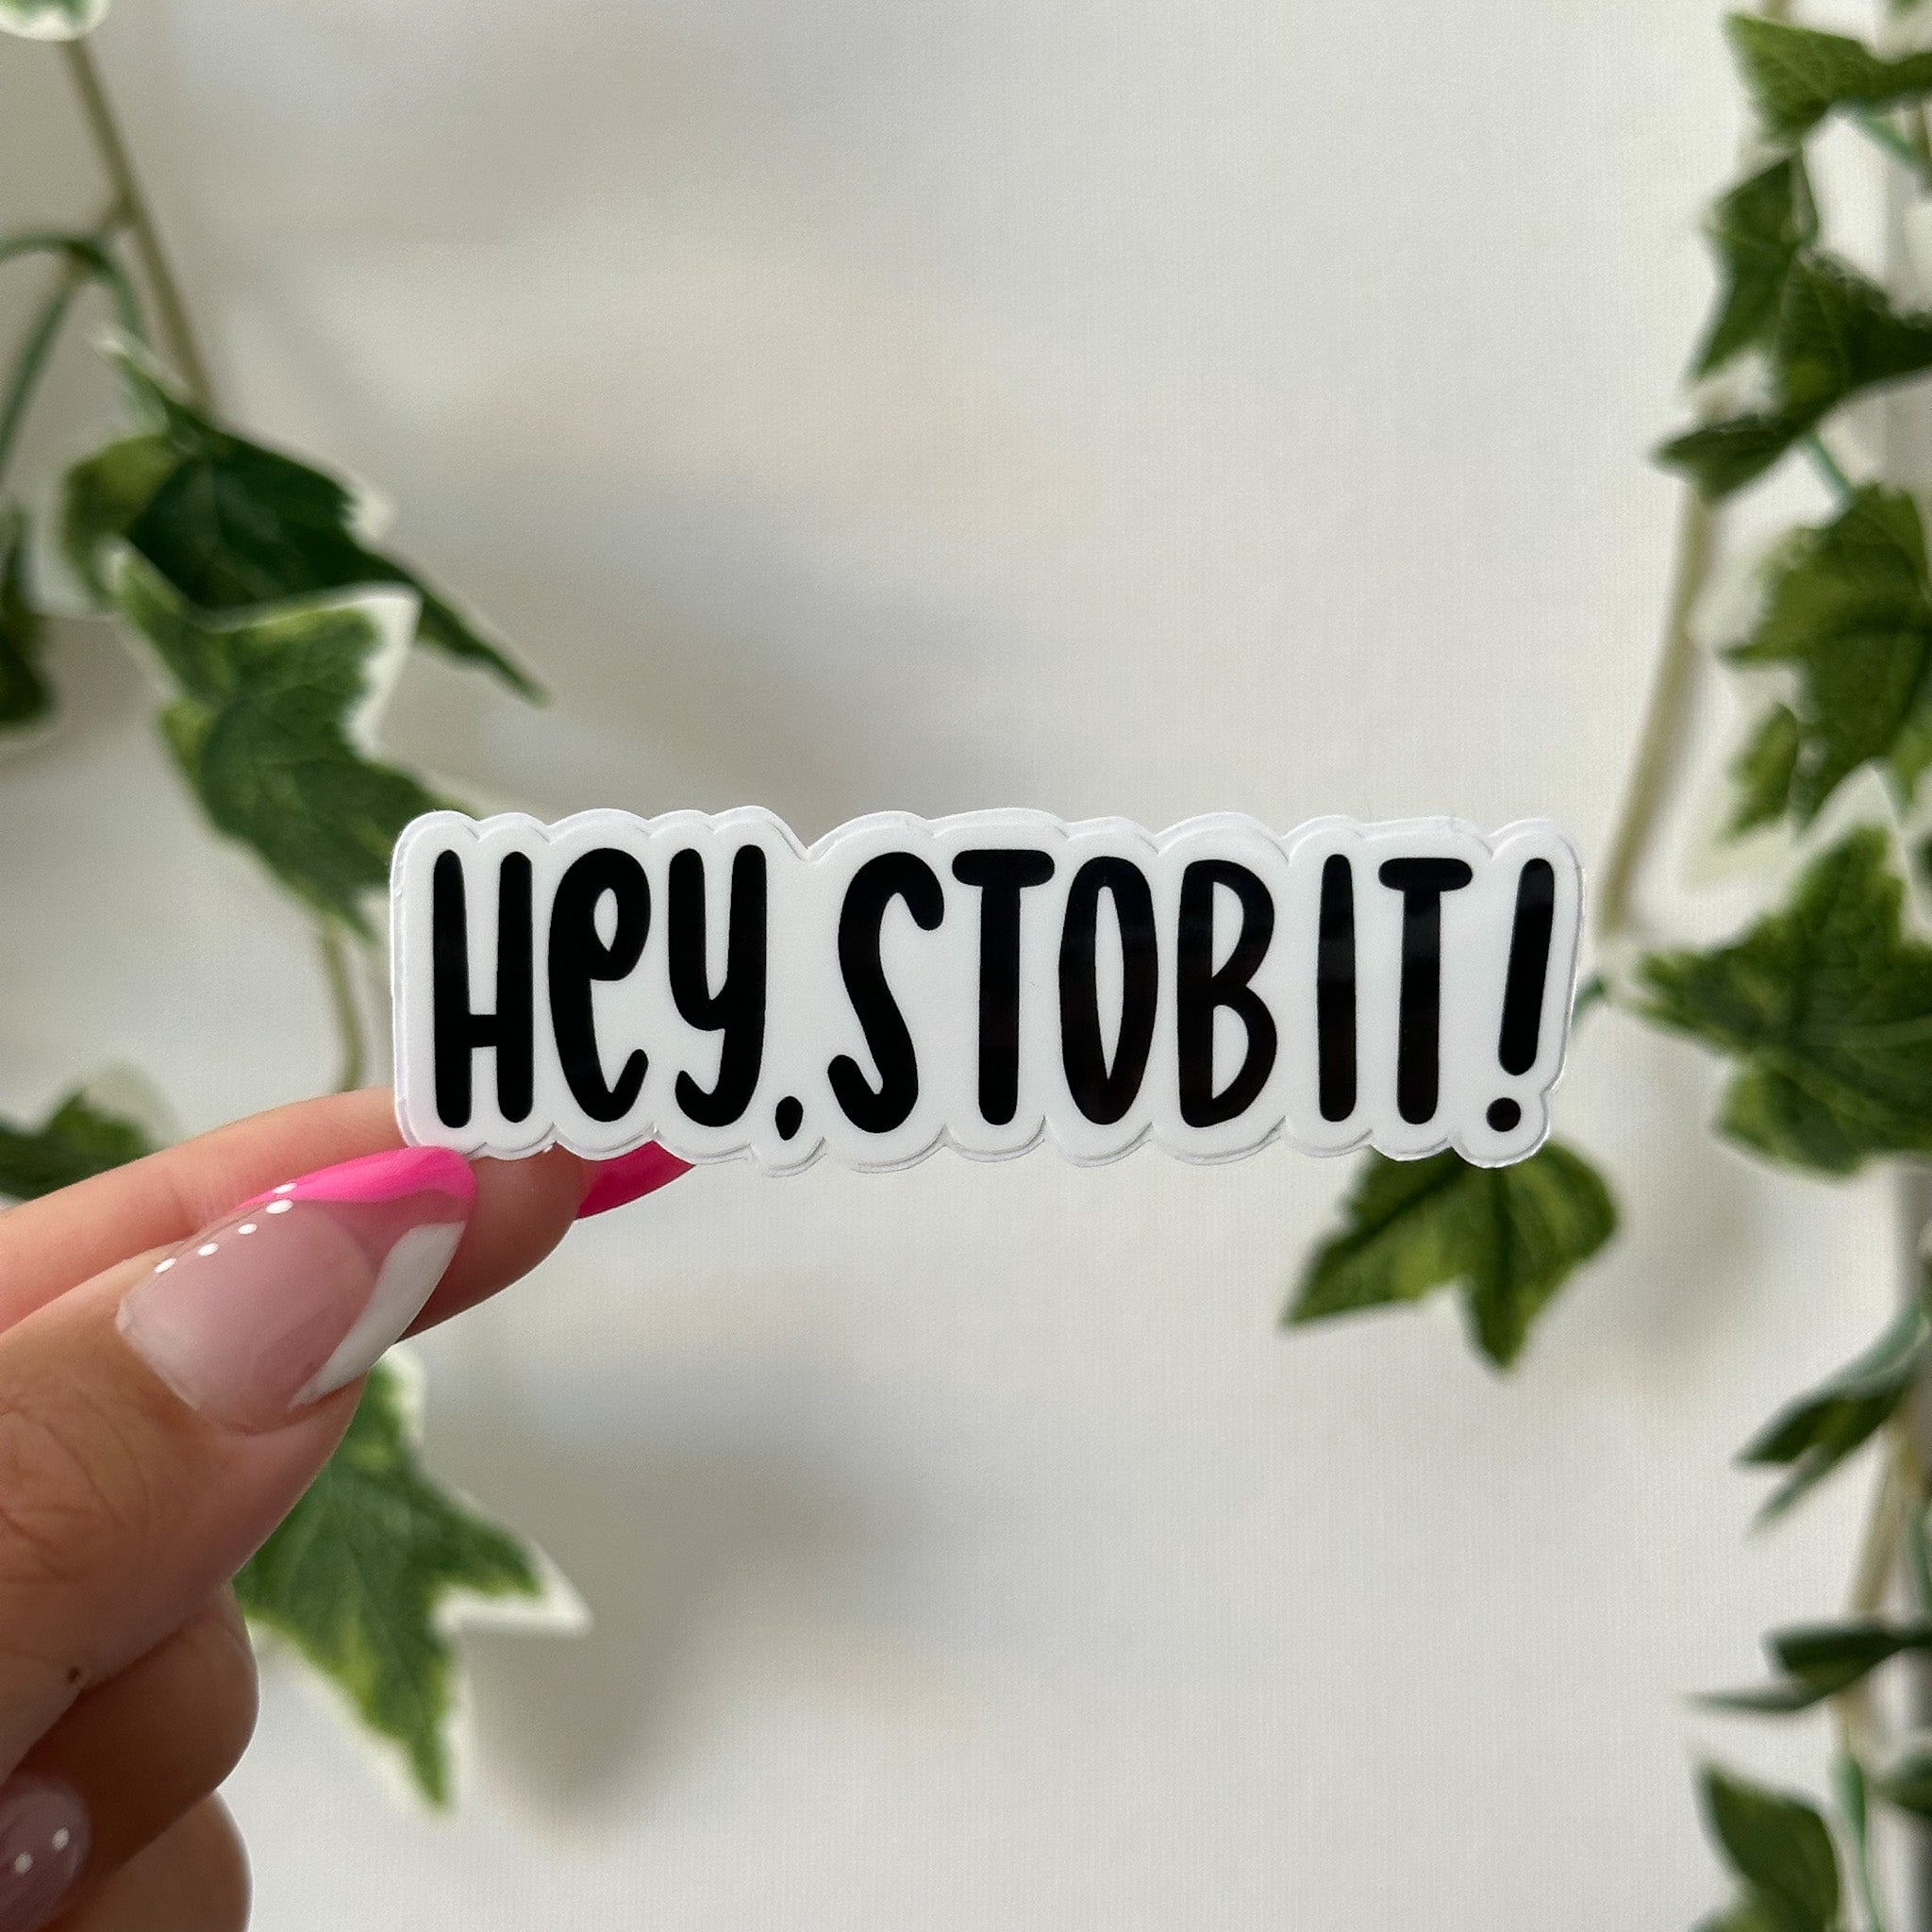 Hey, Stob It! - Simple Sticker